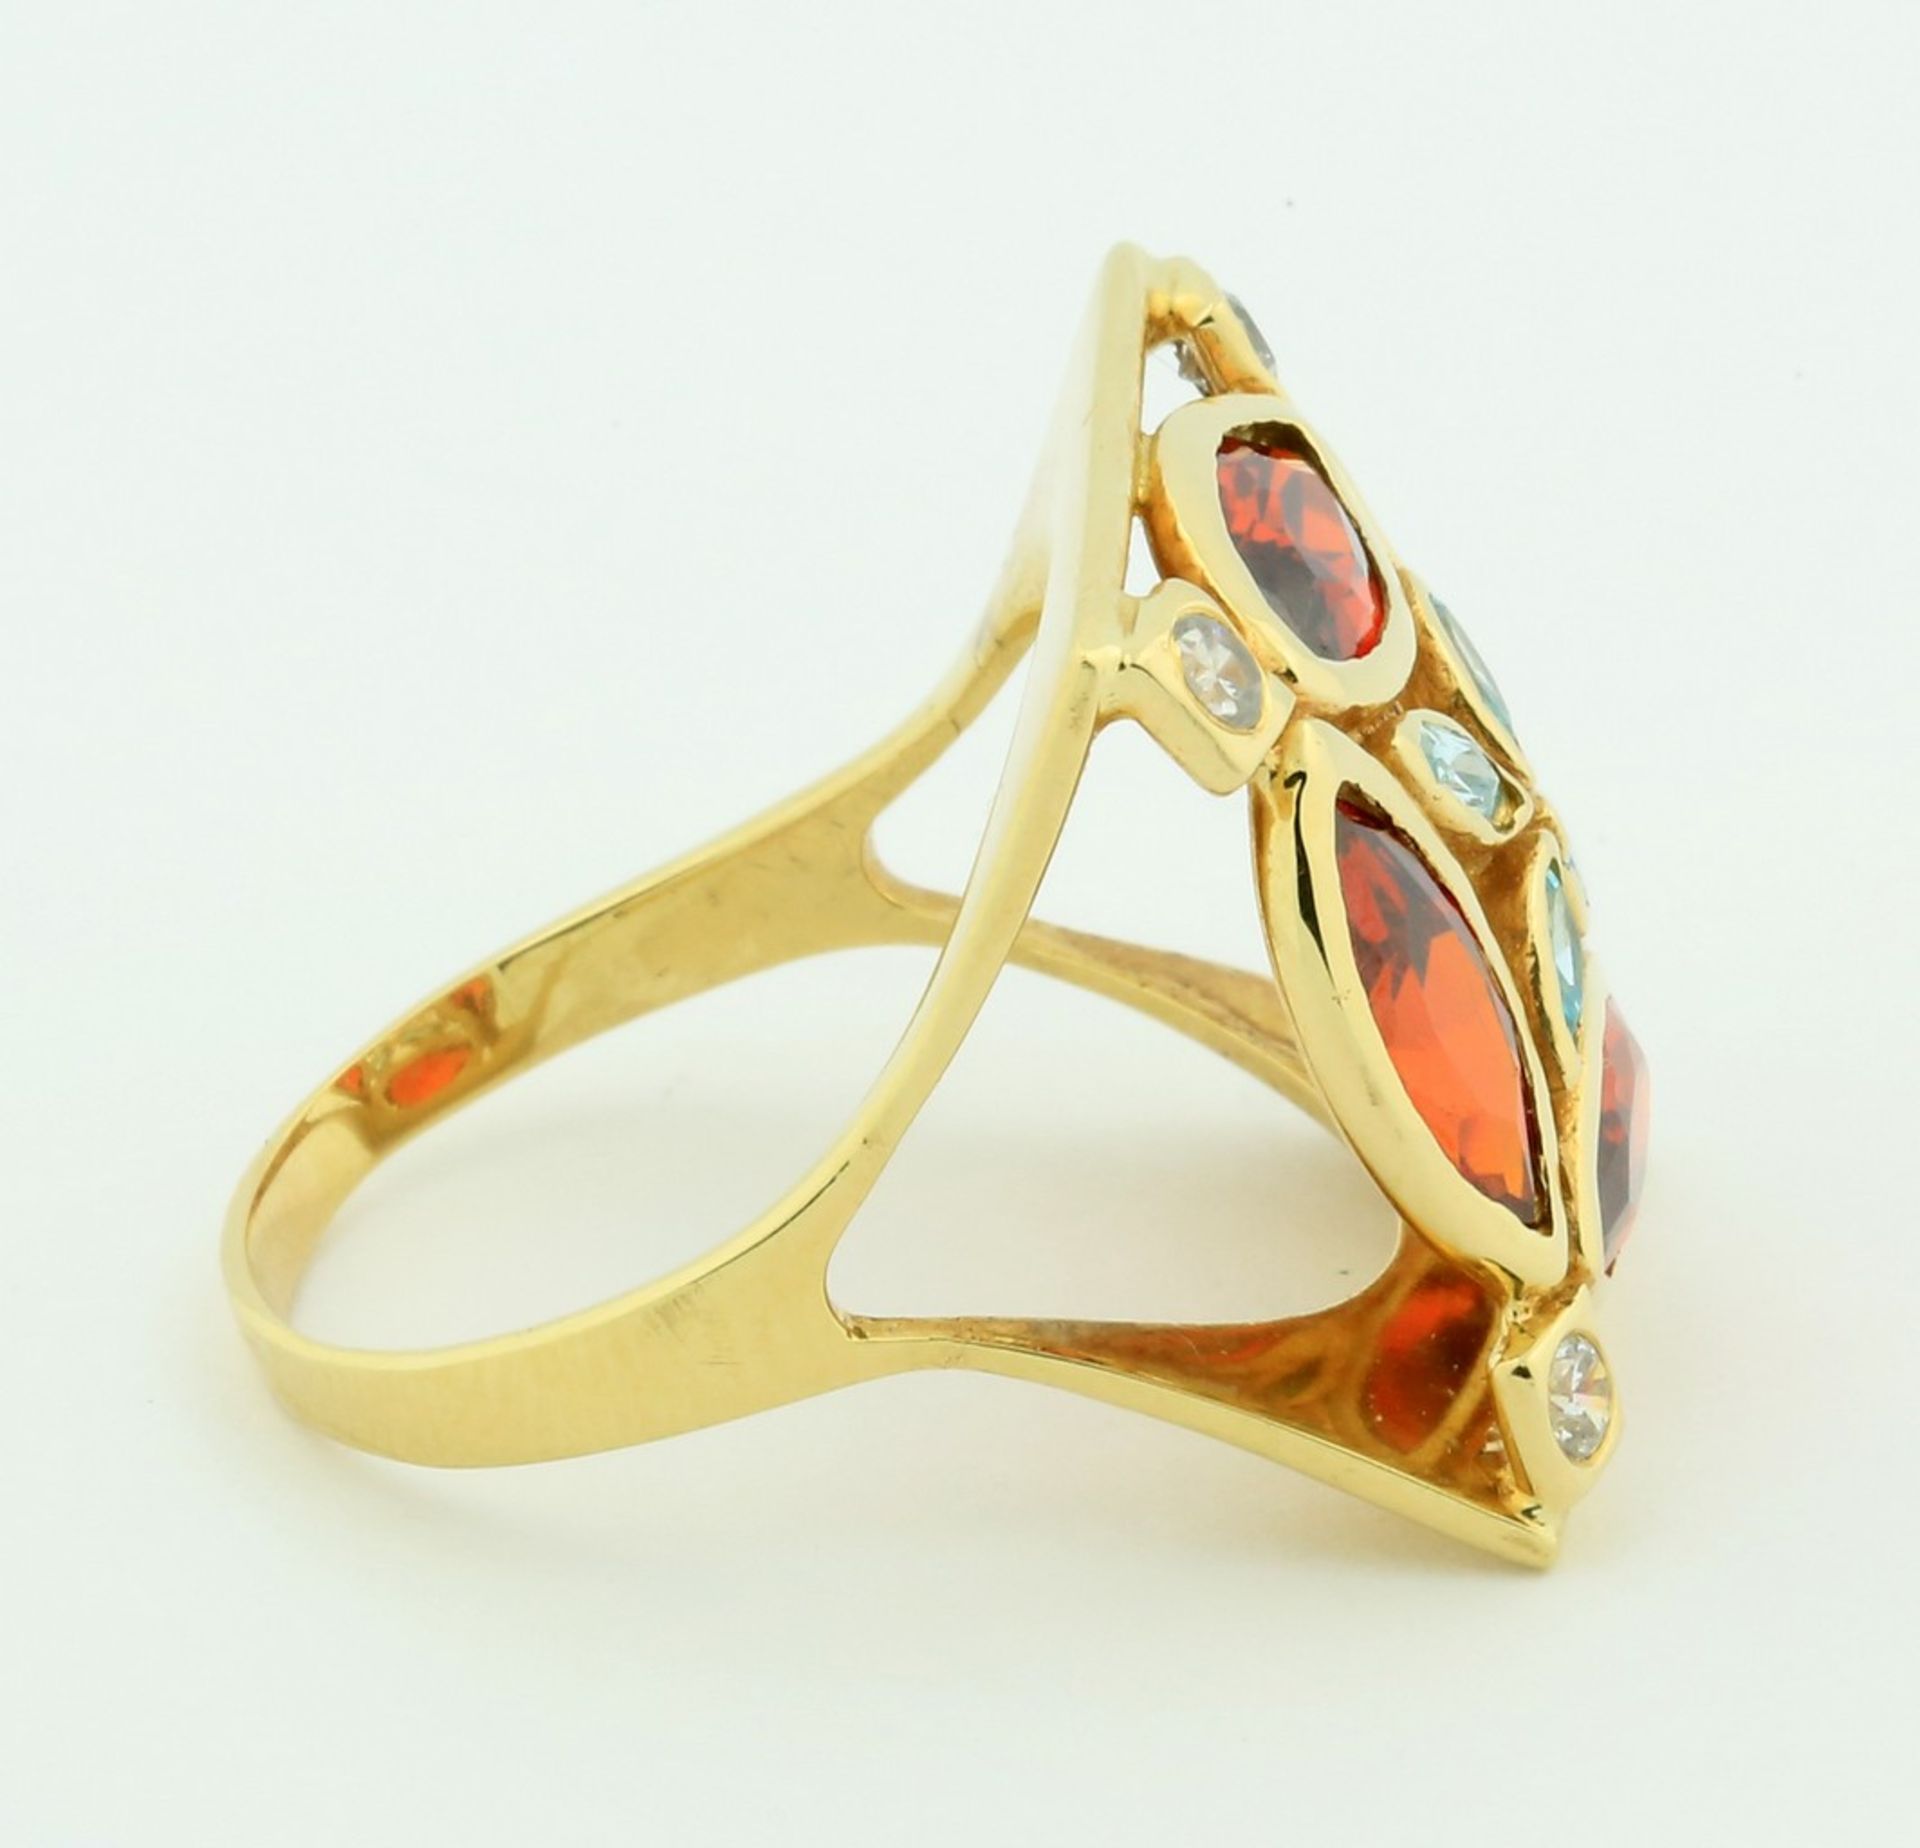 GOLD GEM-SET RING A cluster of gemstones, mounted in 14 karat yellow gold, Ring size 9.25 - Image 3 of 5